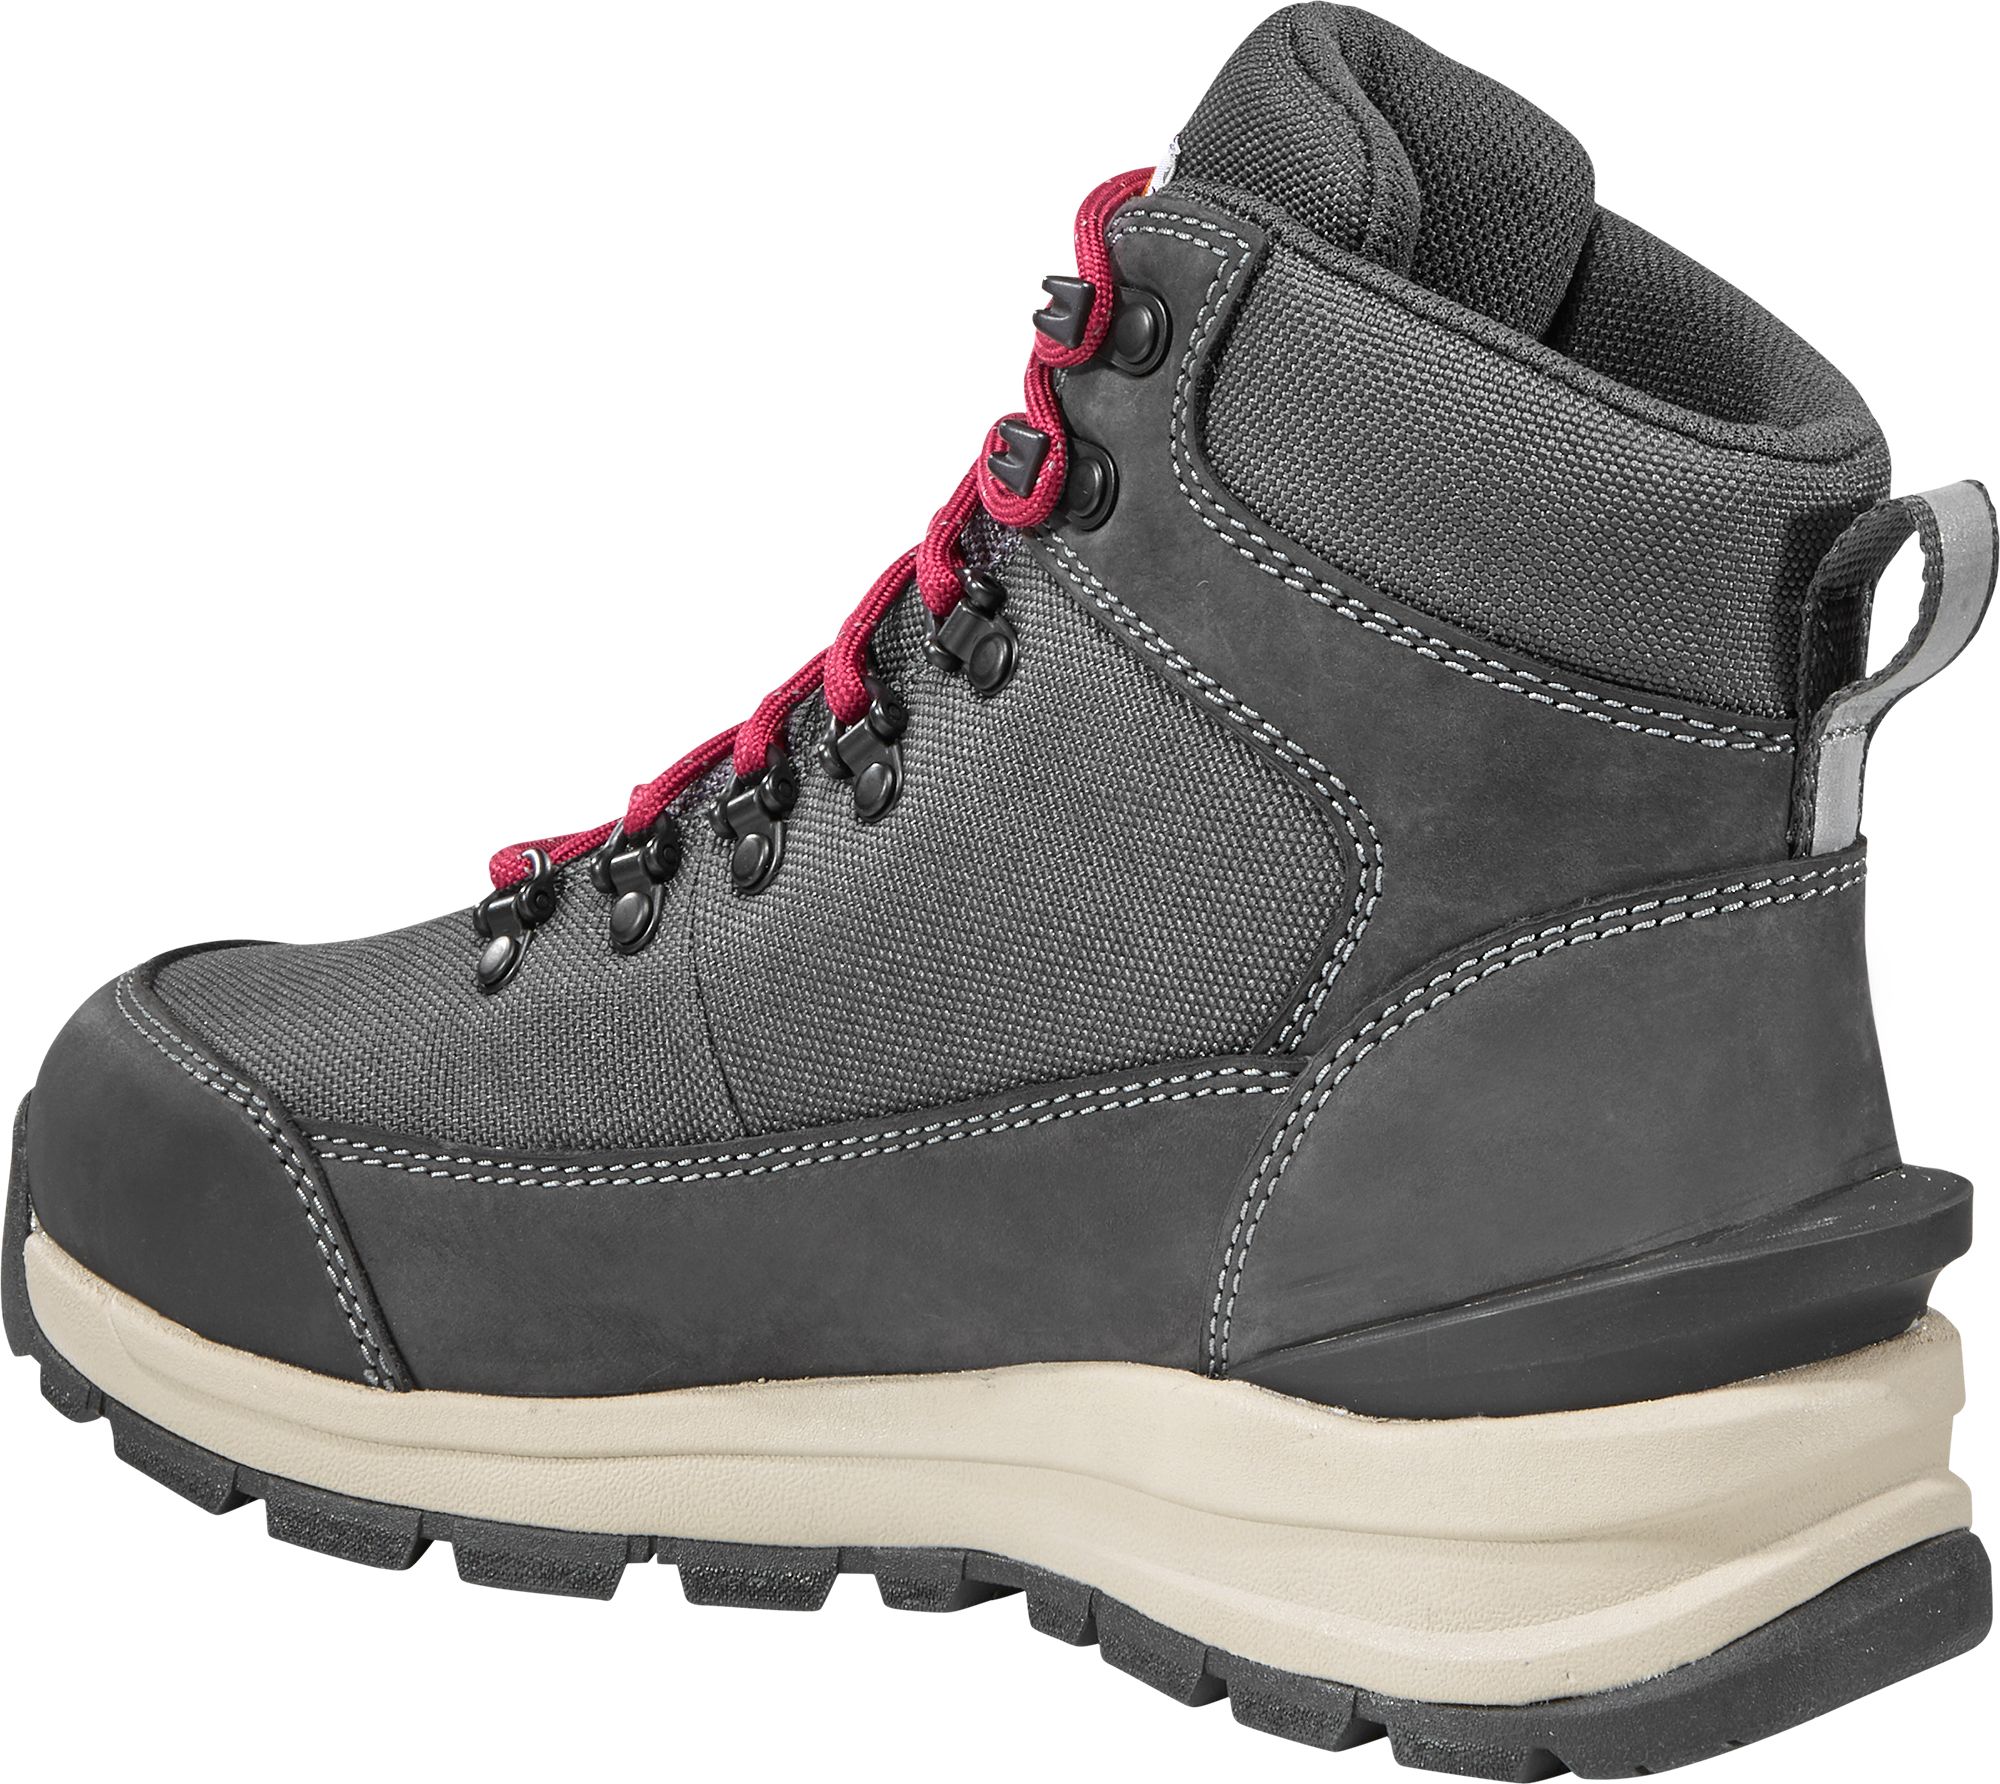 Carhartt Women's Gilmore 6” Waterproof Alloy Toe Hiker Work Boots